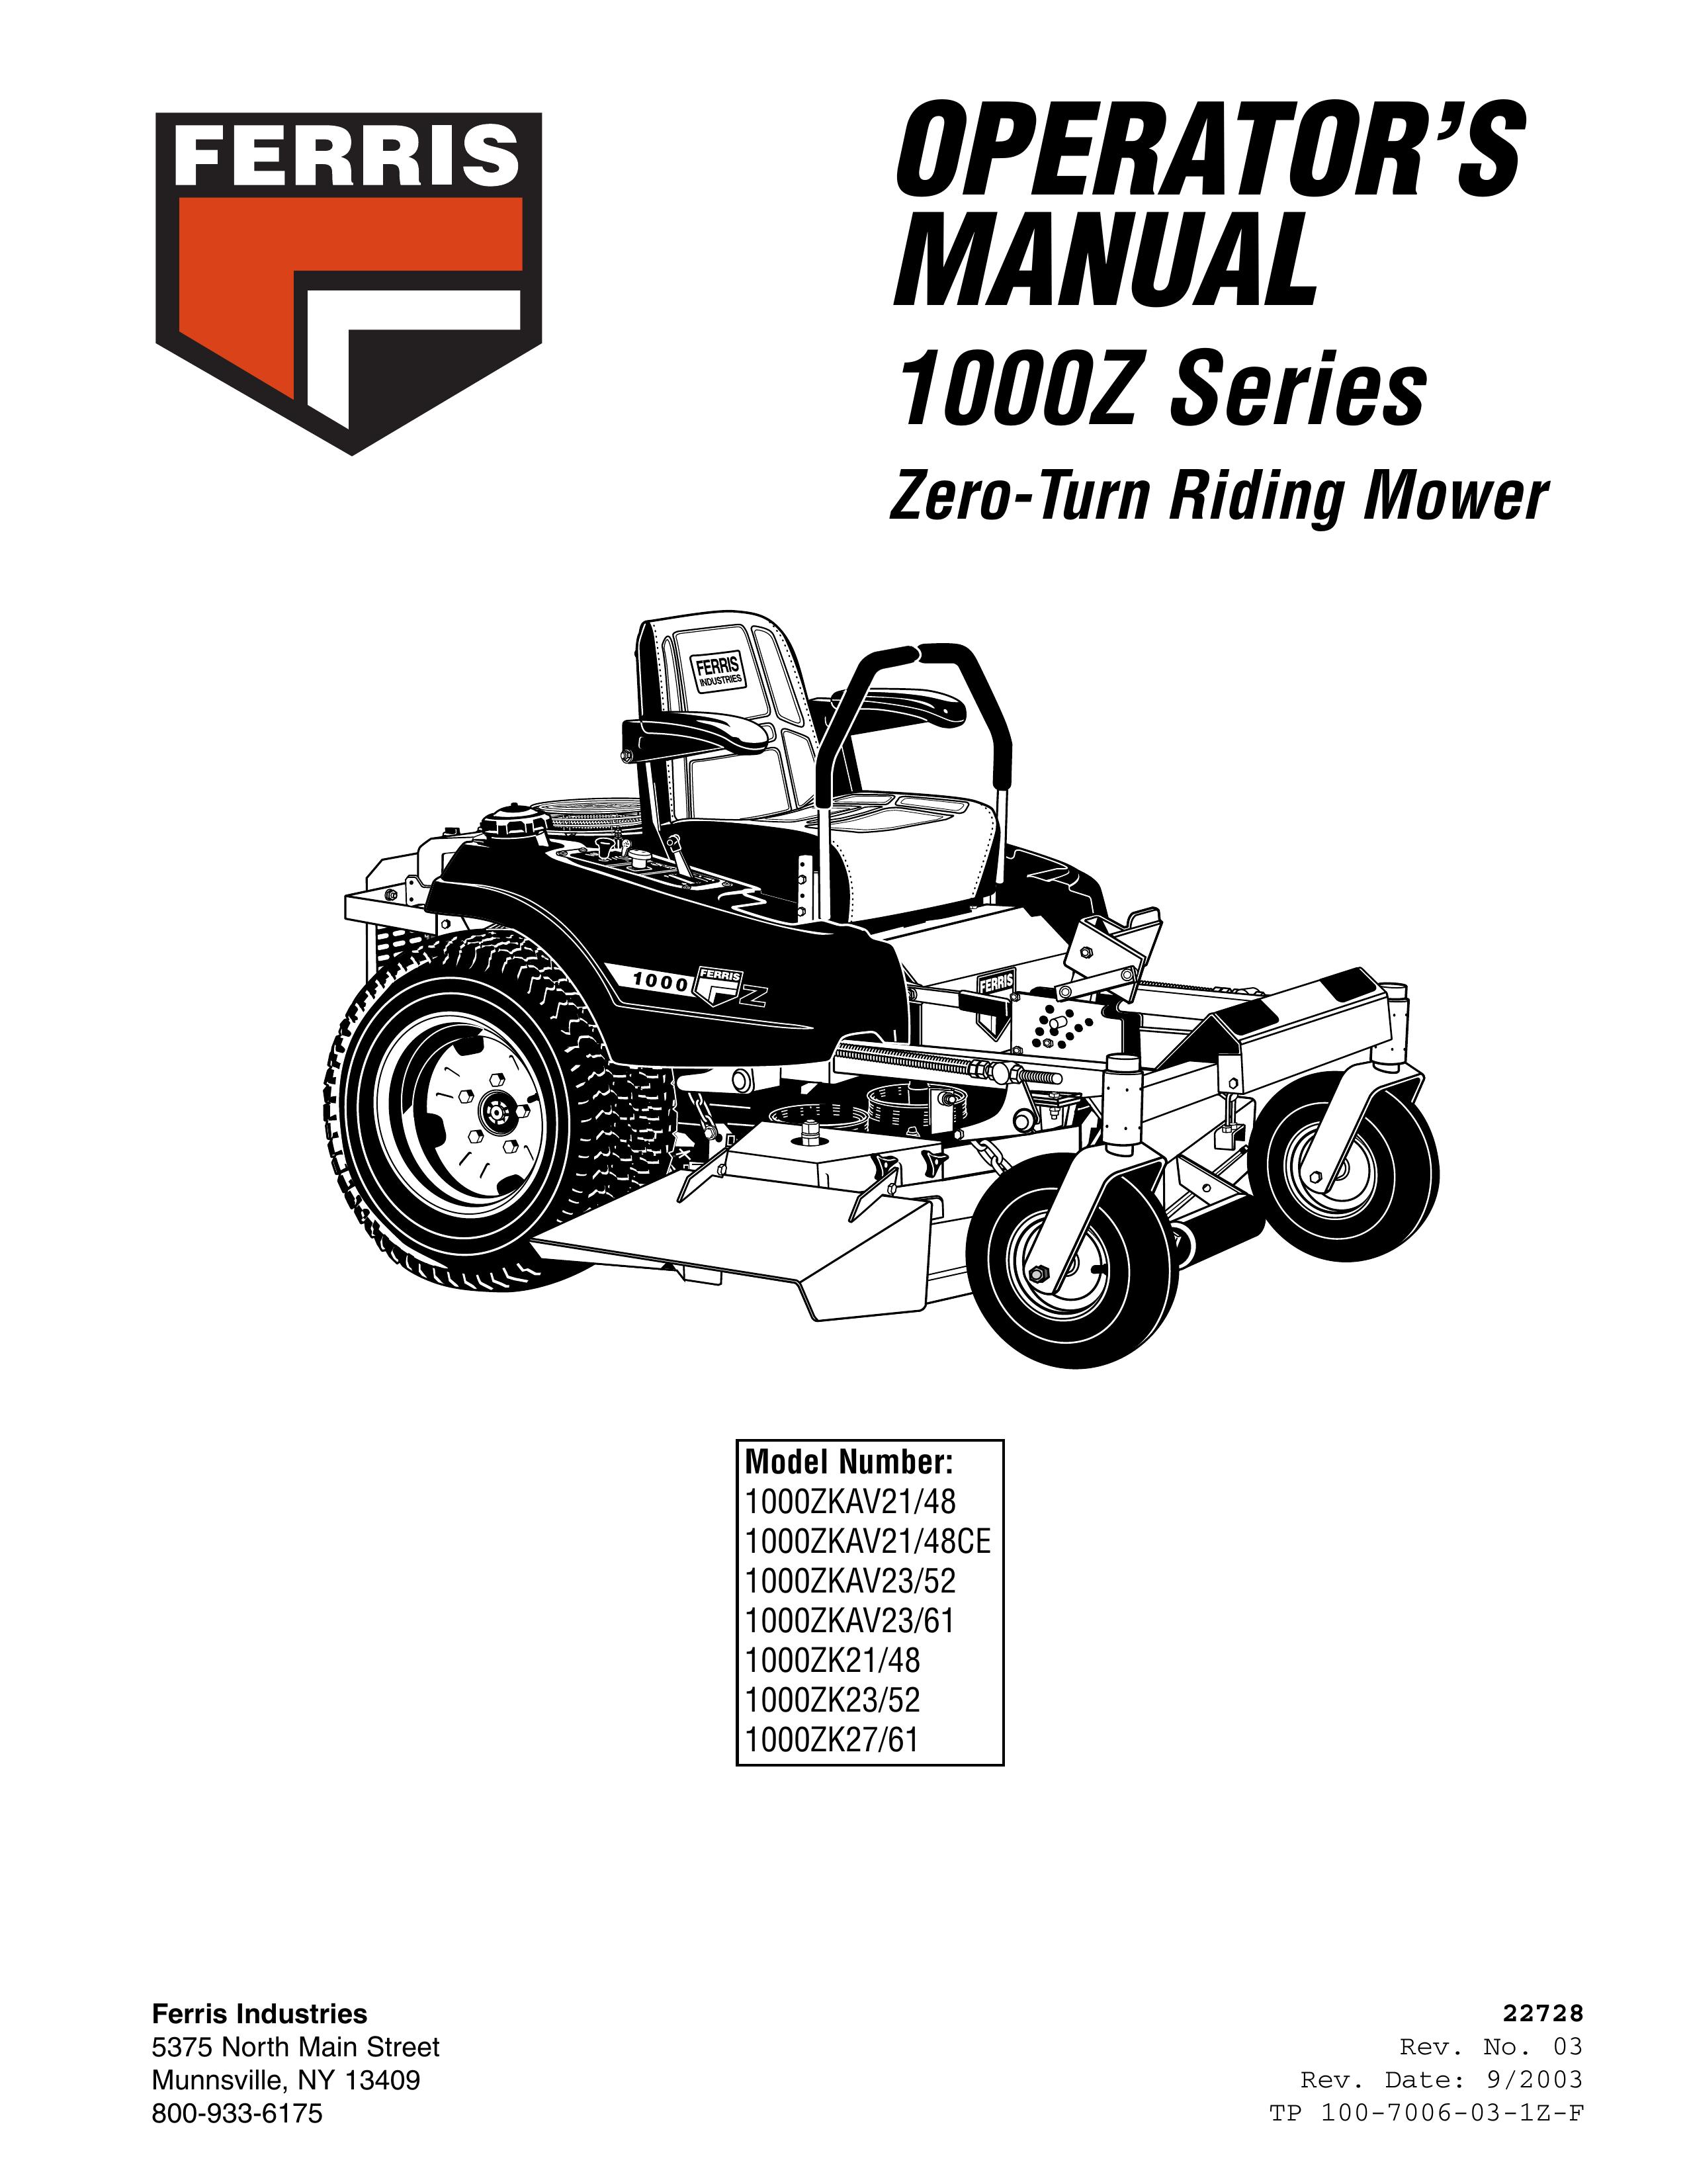 Ferris Industries 1000ZKAV21/48CE Lawn Mower User Manual